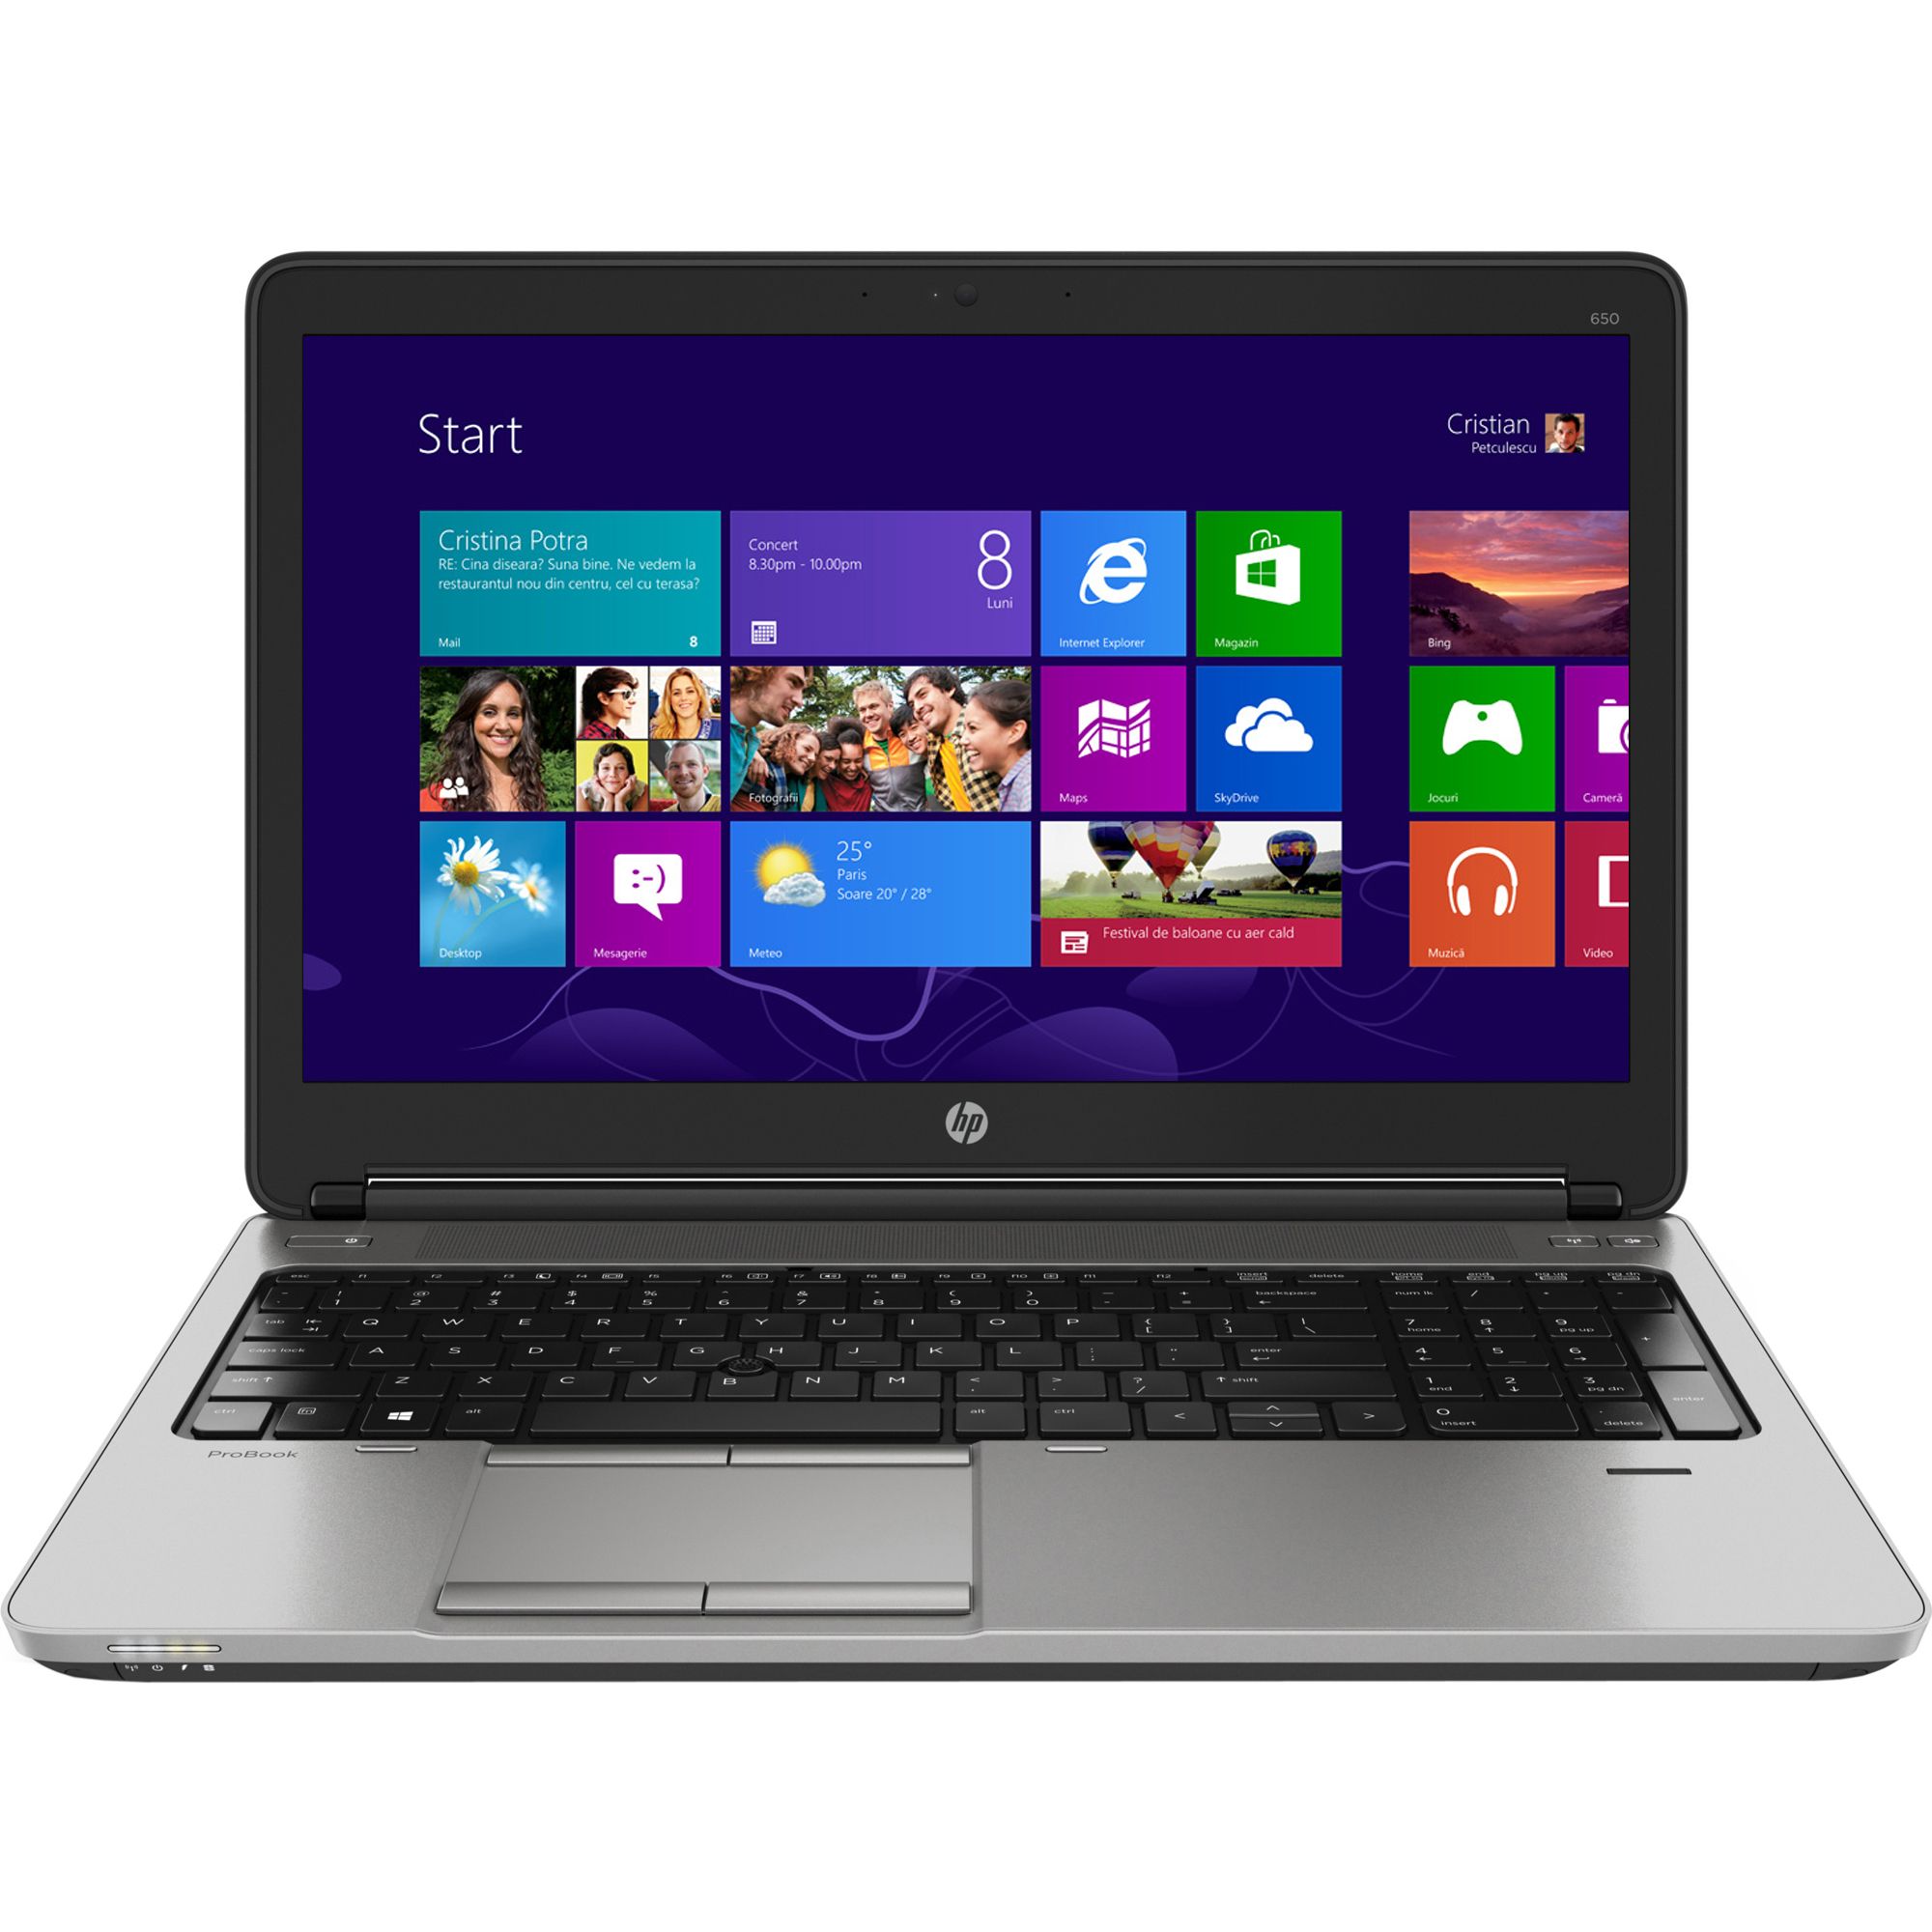  Laptop HP ProBook 650 G1, Intel Core i5-4210M, 4GB DDR3, HDD 500GB, Intel HD Graphics, Windows 8.1 Pro 